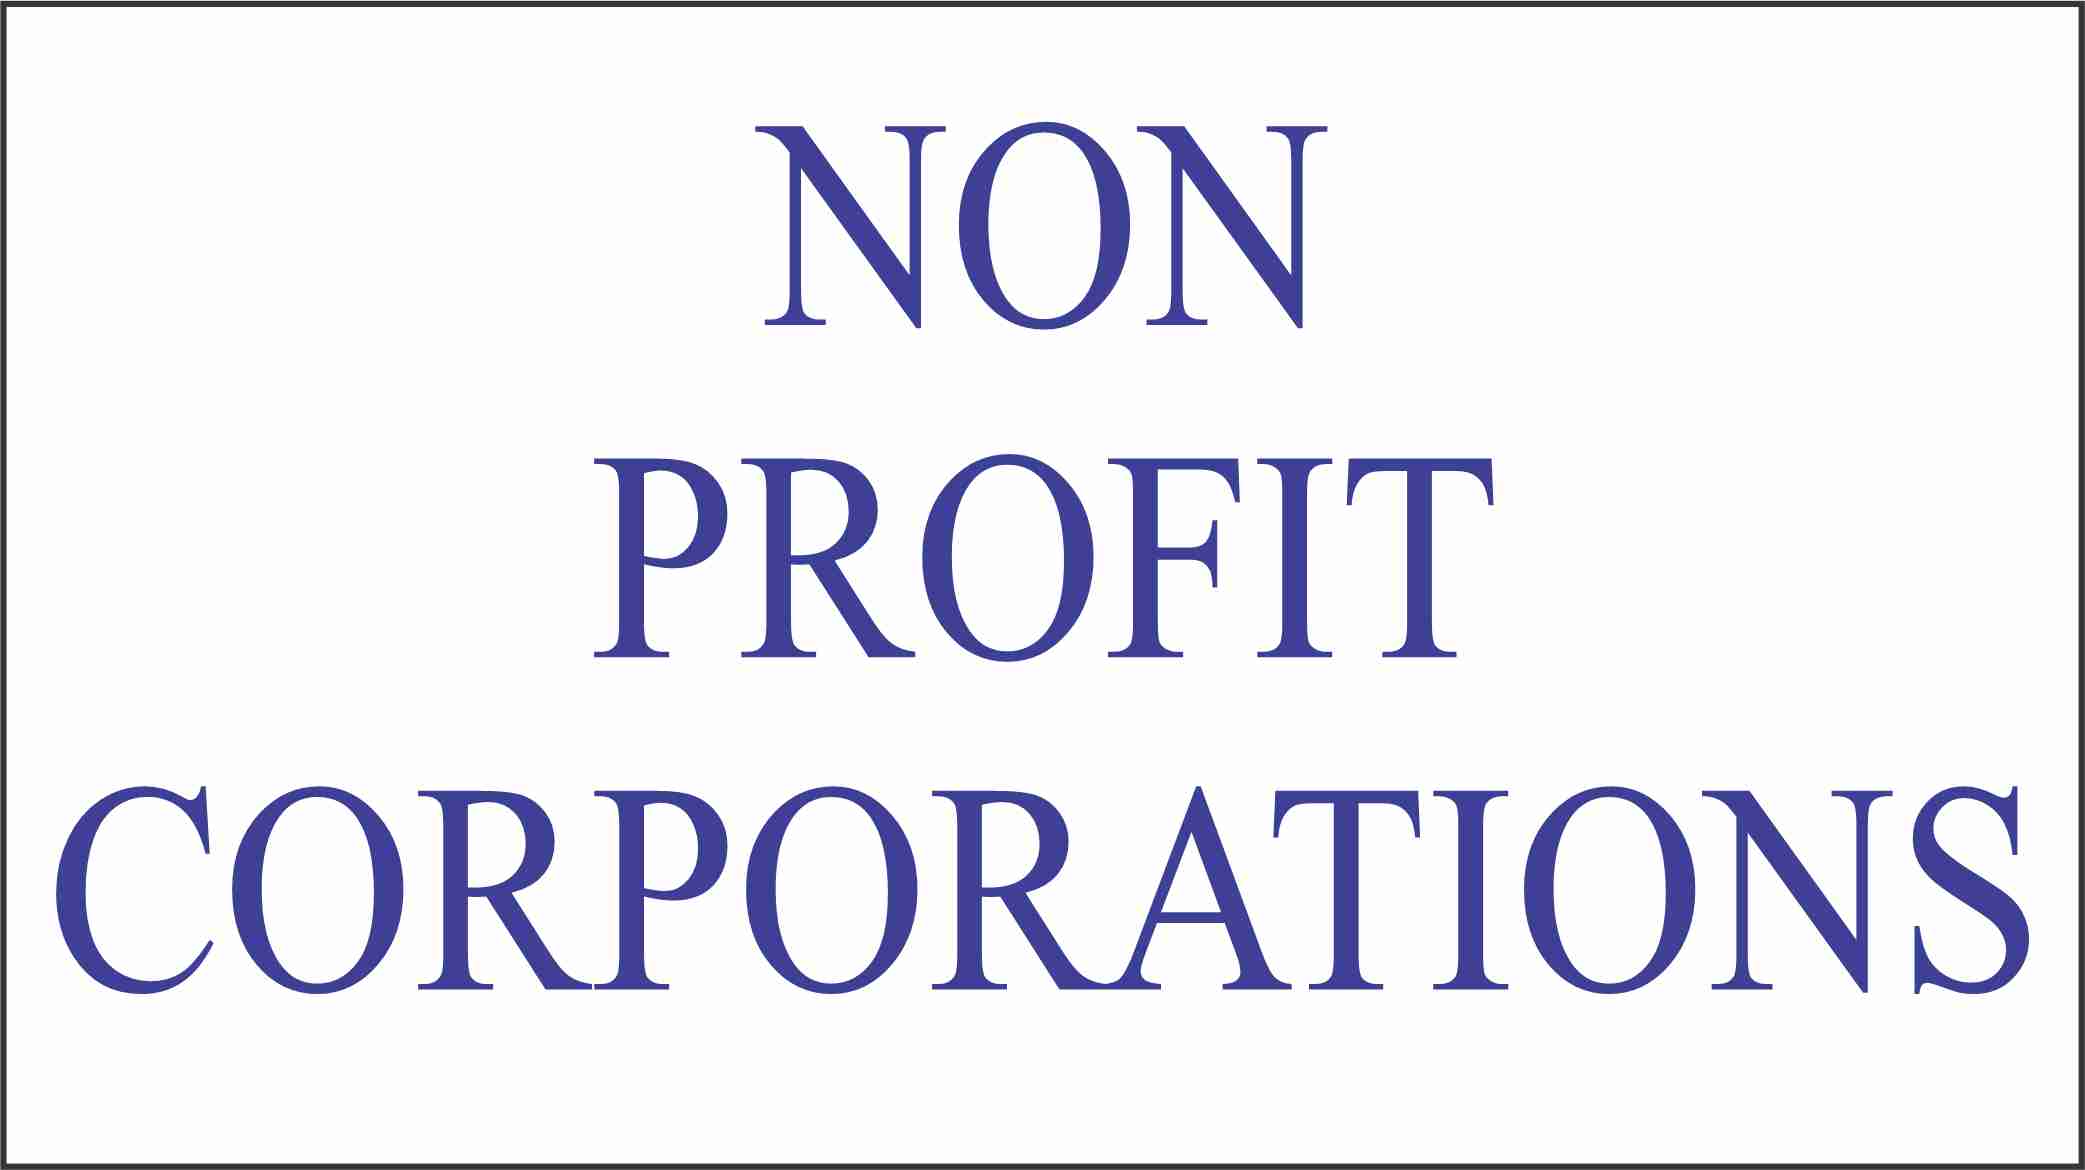 Non Profit Corporations